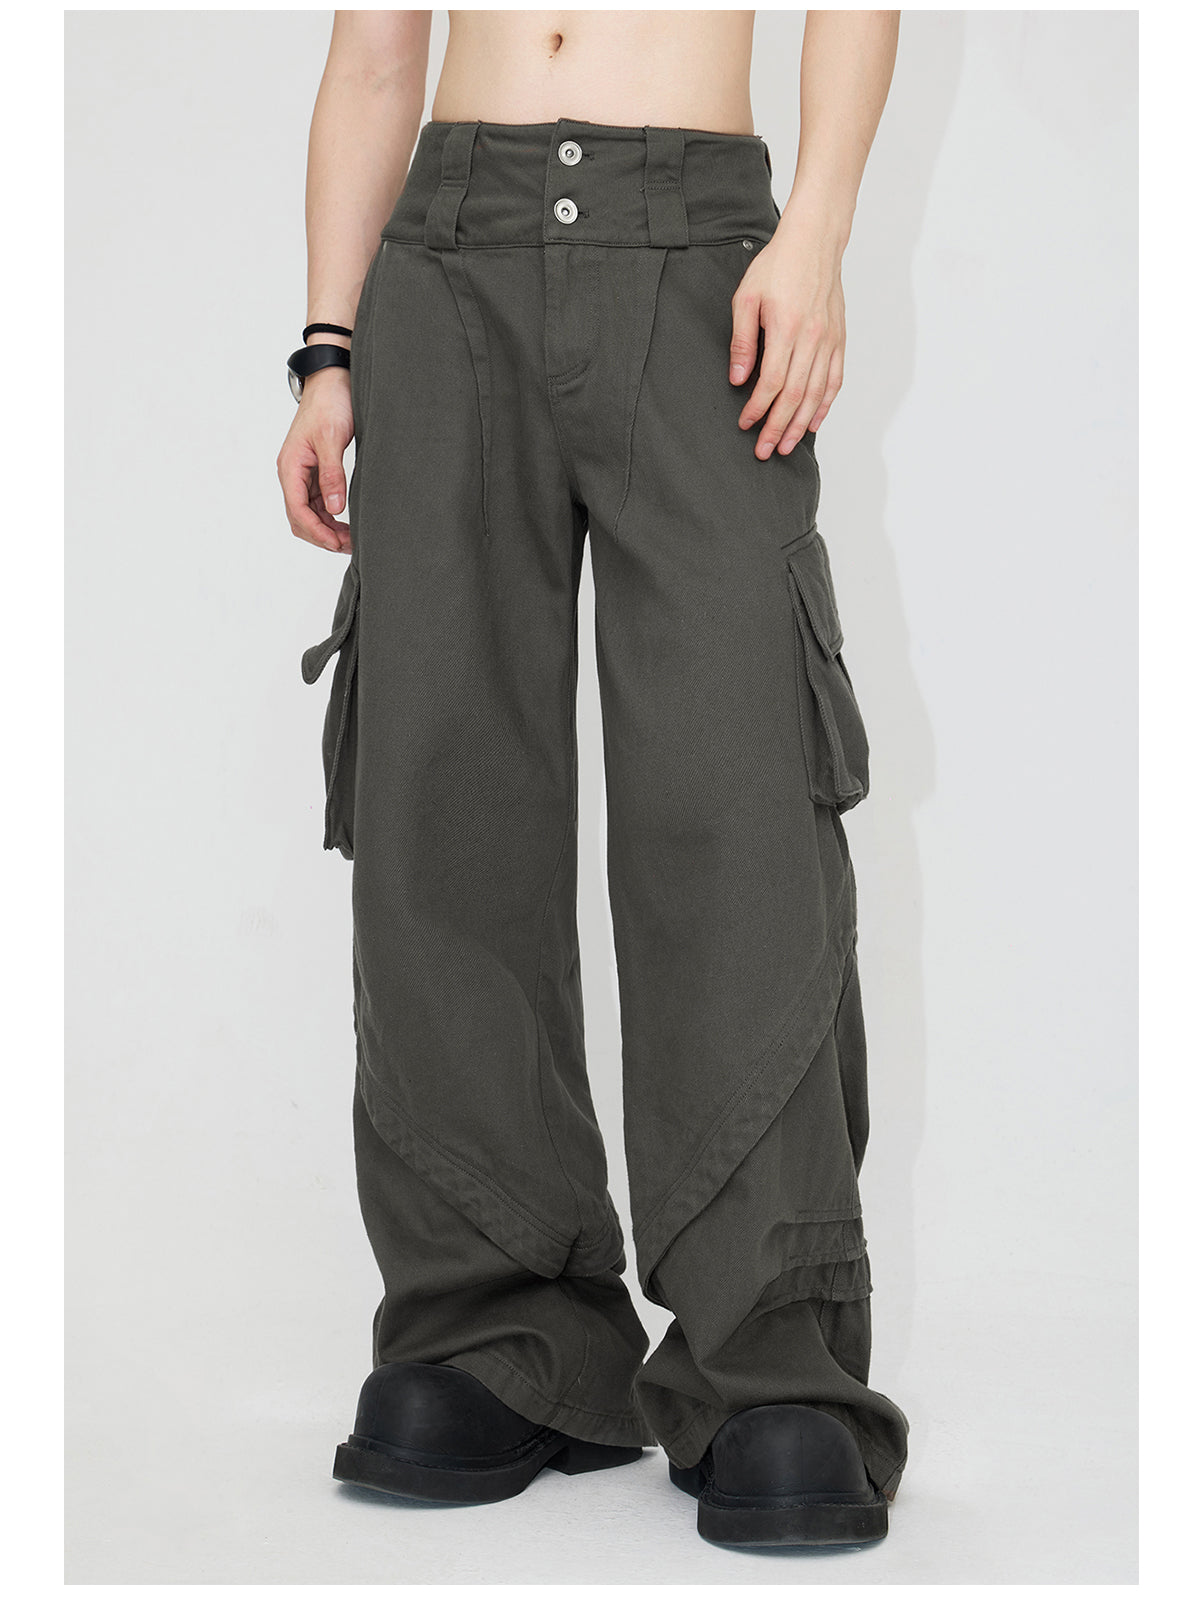 Multi-pocket double waist cargo pants